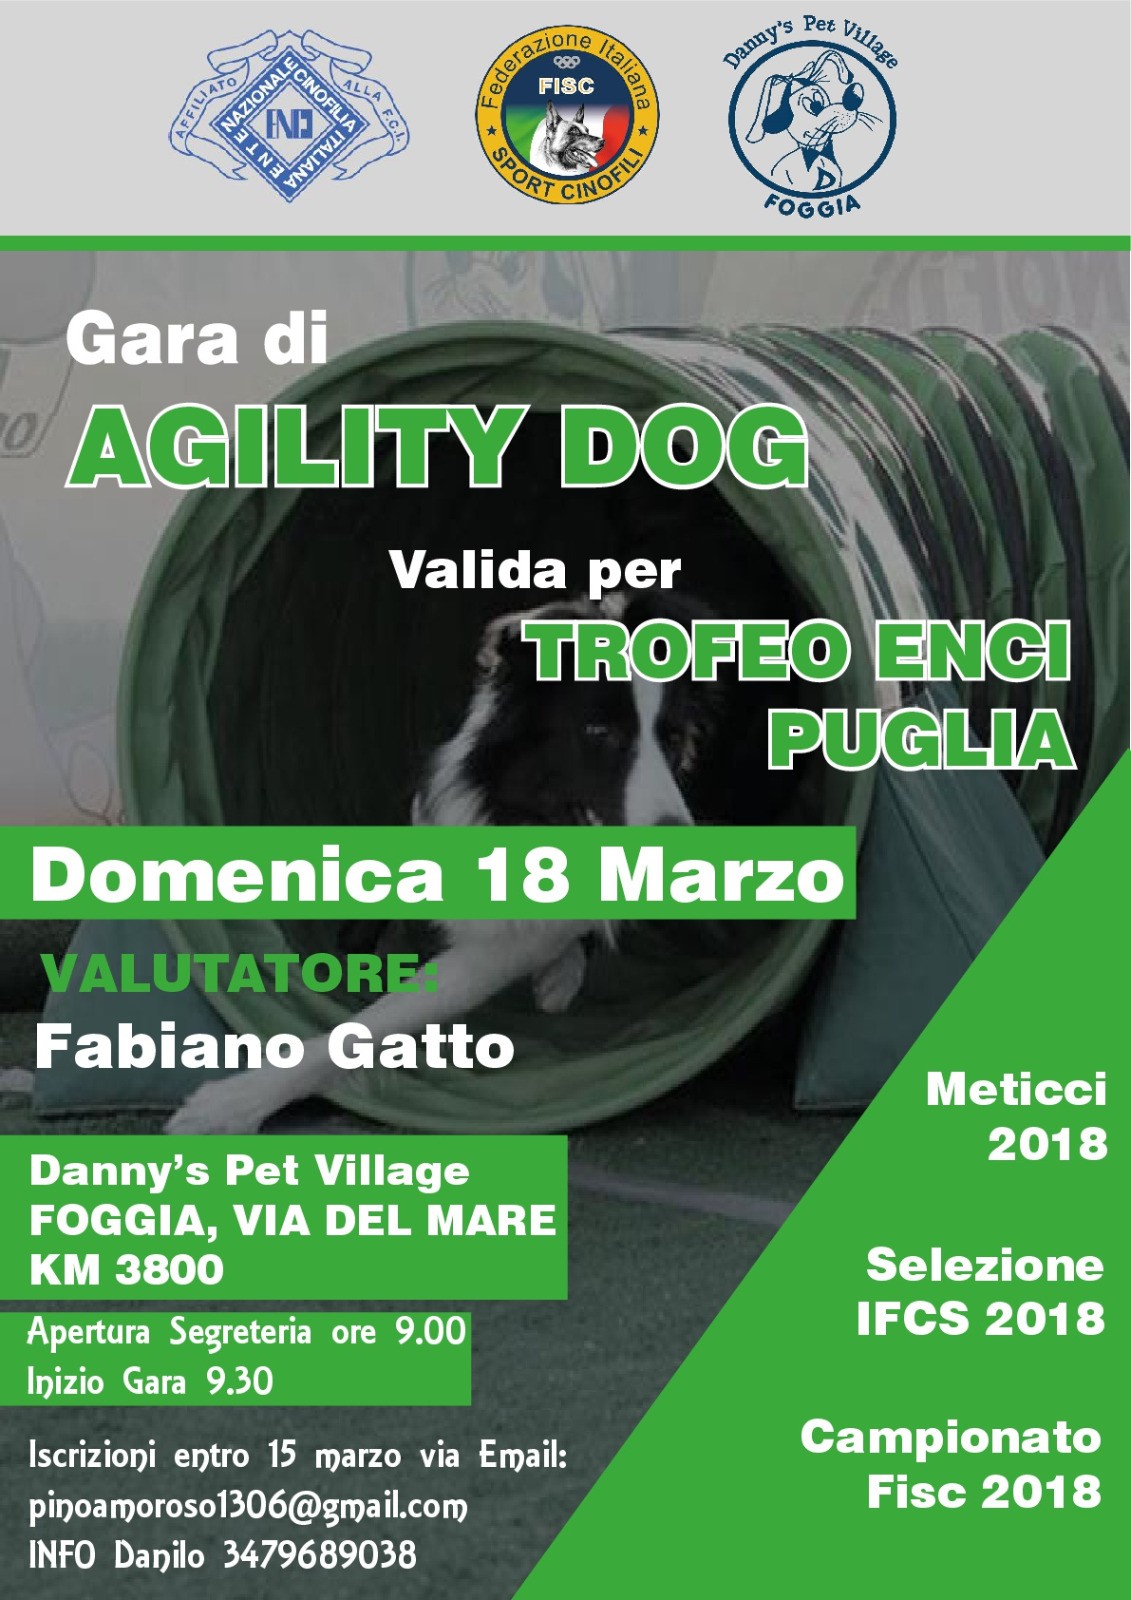 GARA DI AGILITY DOG TROFEO ENCI PUGLIA